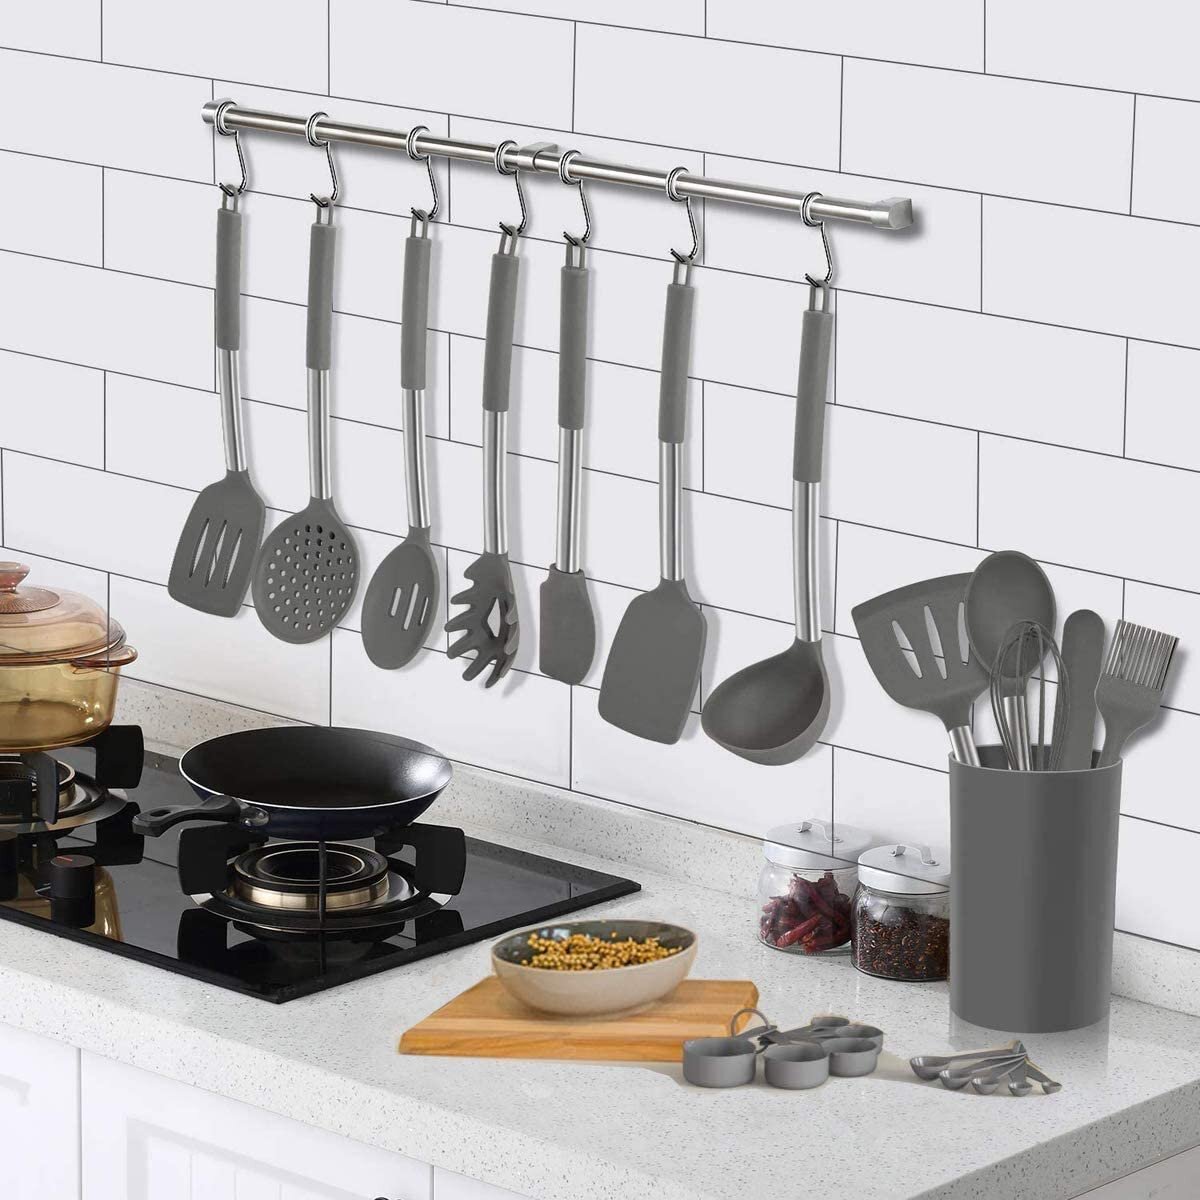 23 Nylon Kitchen Utensils & Stainless Steel Cooking Utensils Set